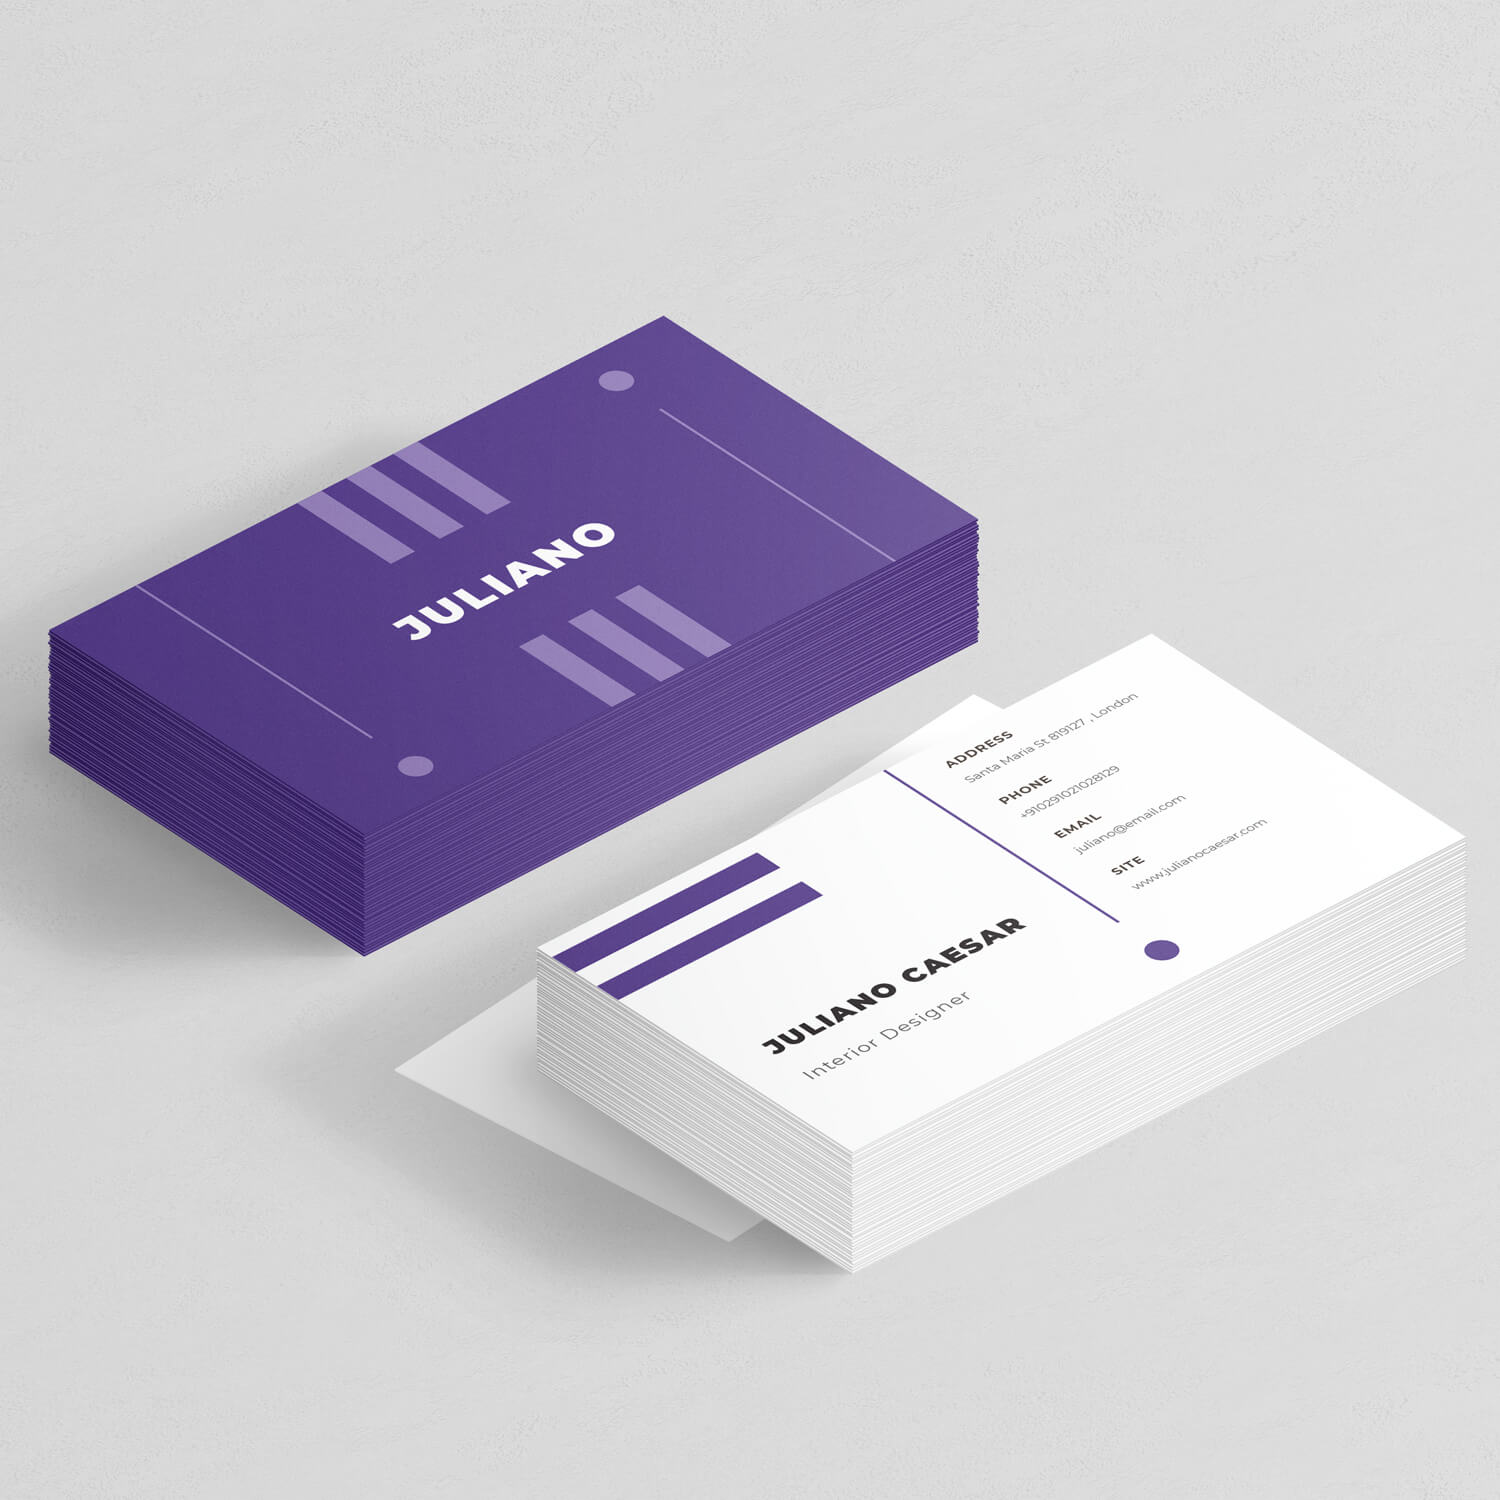 Juliano – Business Card design